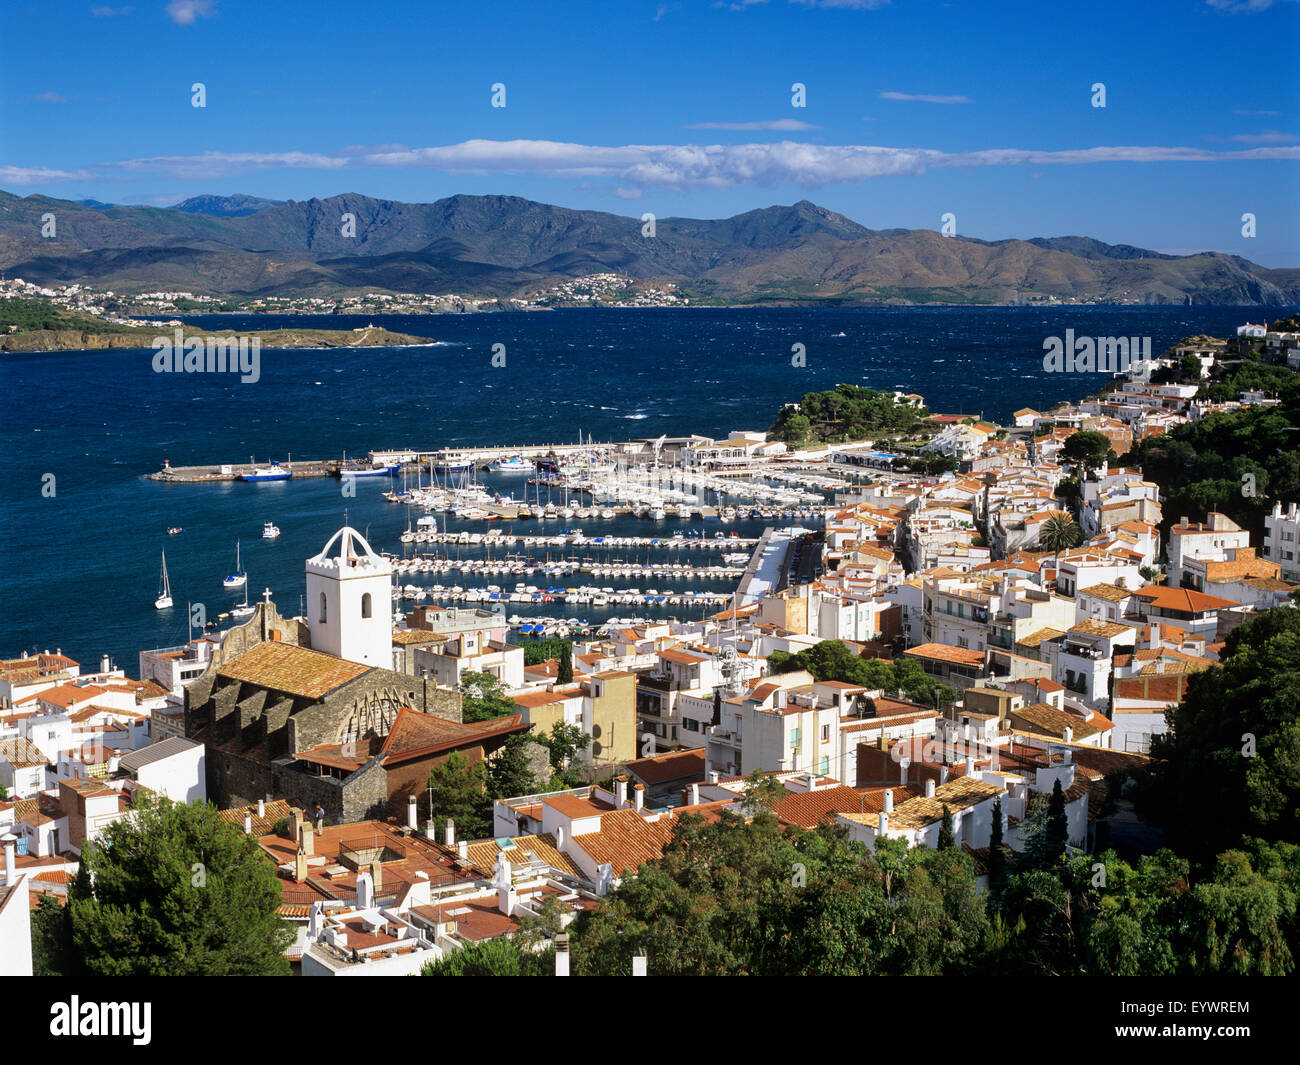 View over town and port, El Port de la Selva, Costa Brava, Catalunya, Spain, Mediterranean, Europe Stock Photo